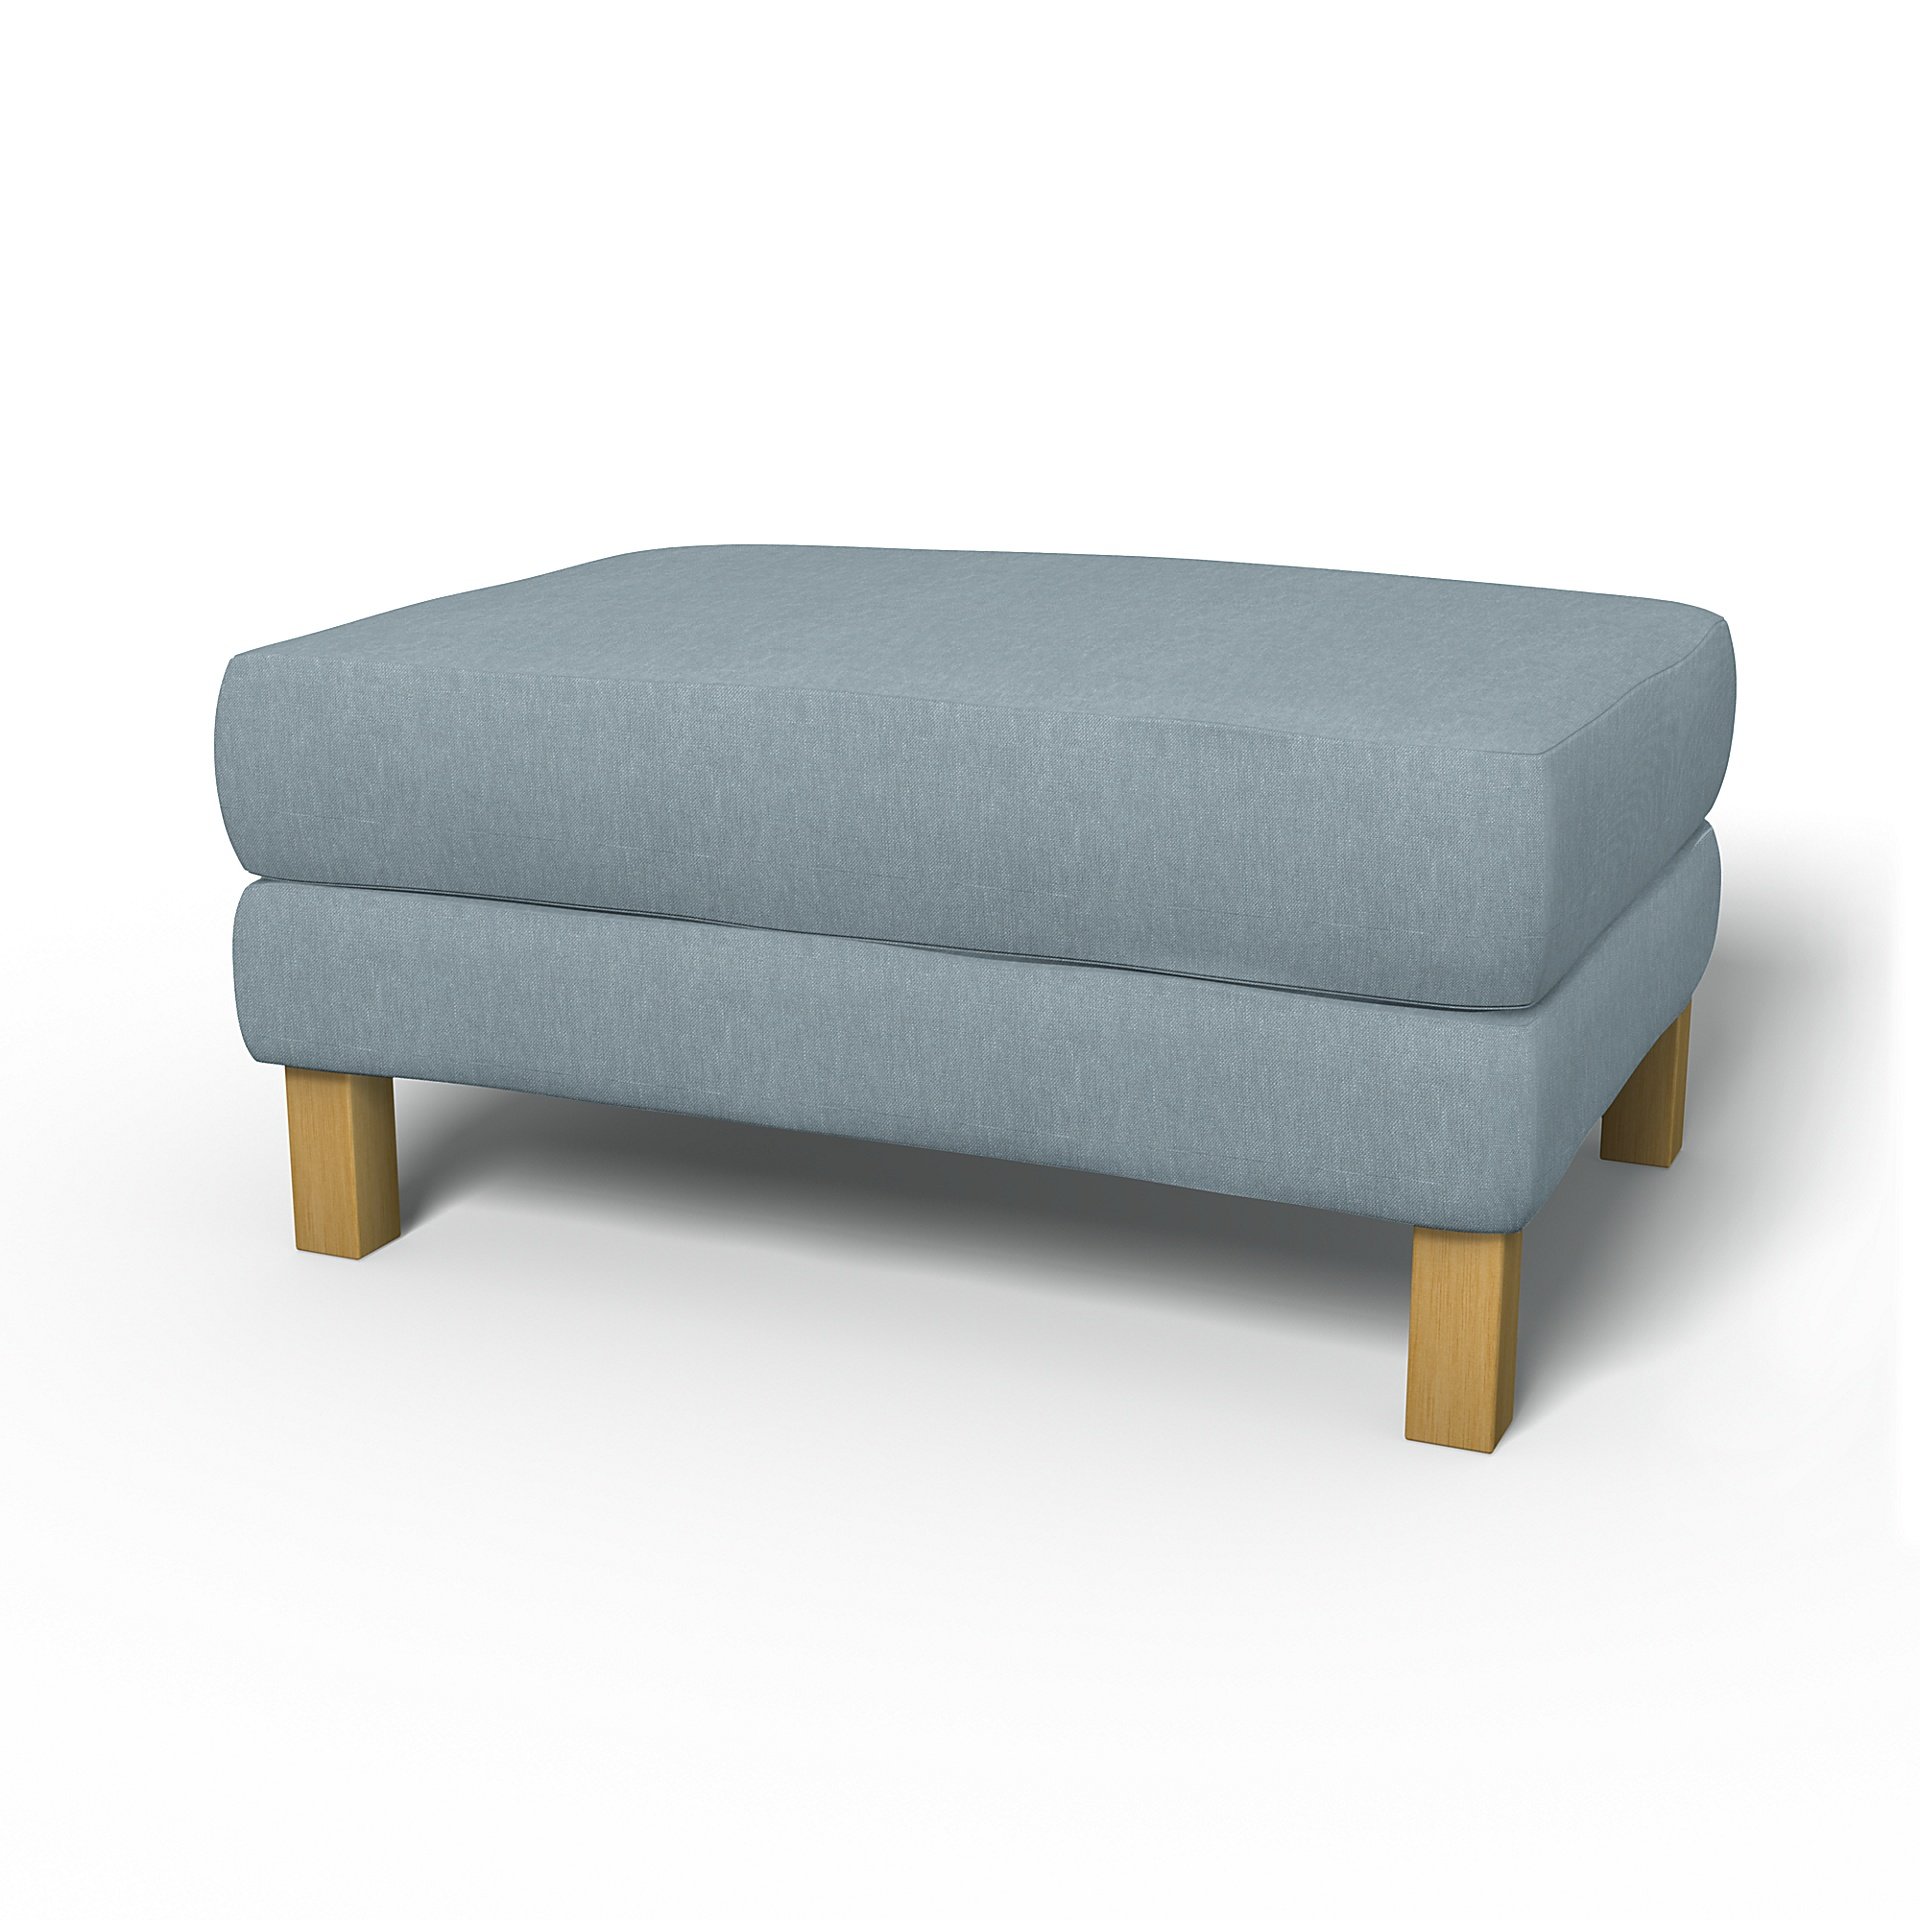 IKEA - Karlstad Footstool Cover, Dusty Blue, Linen - Bemz